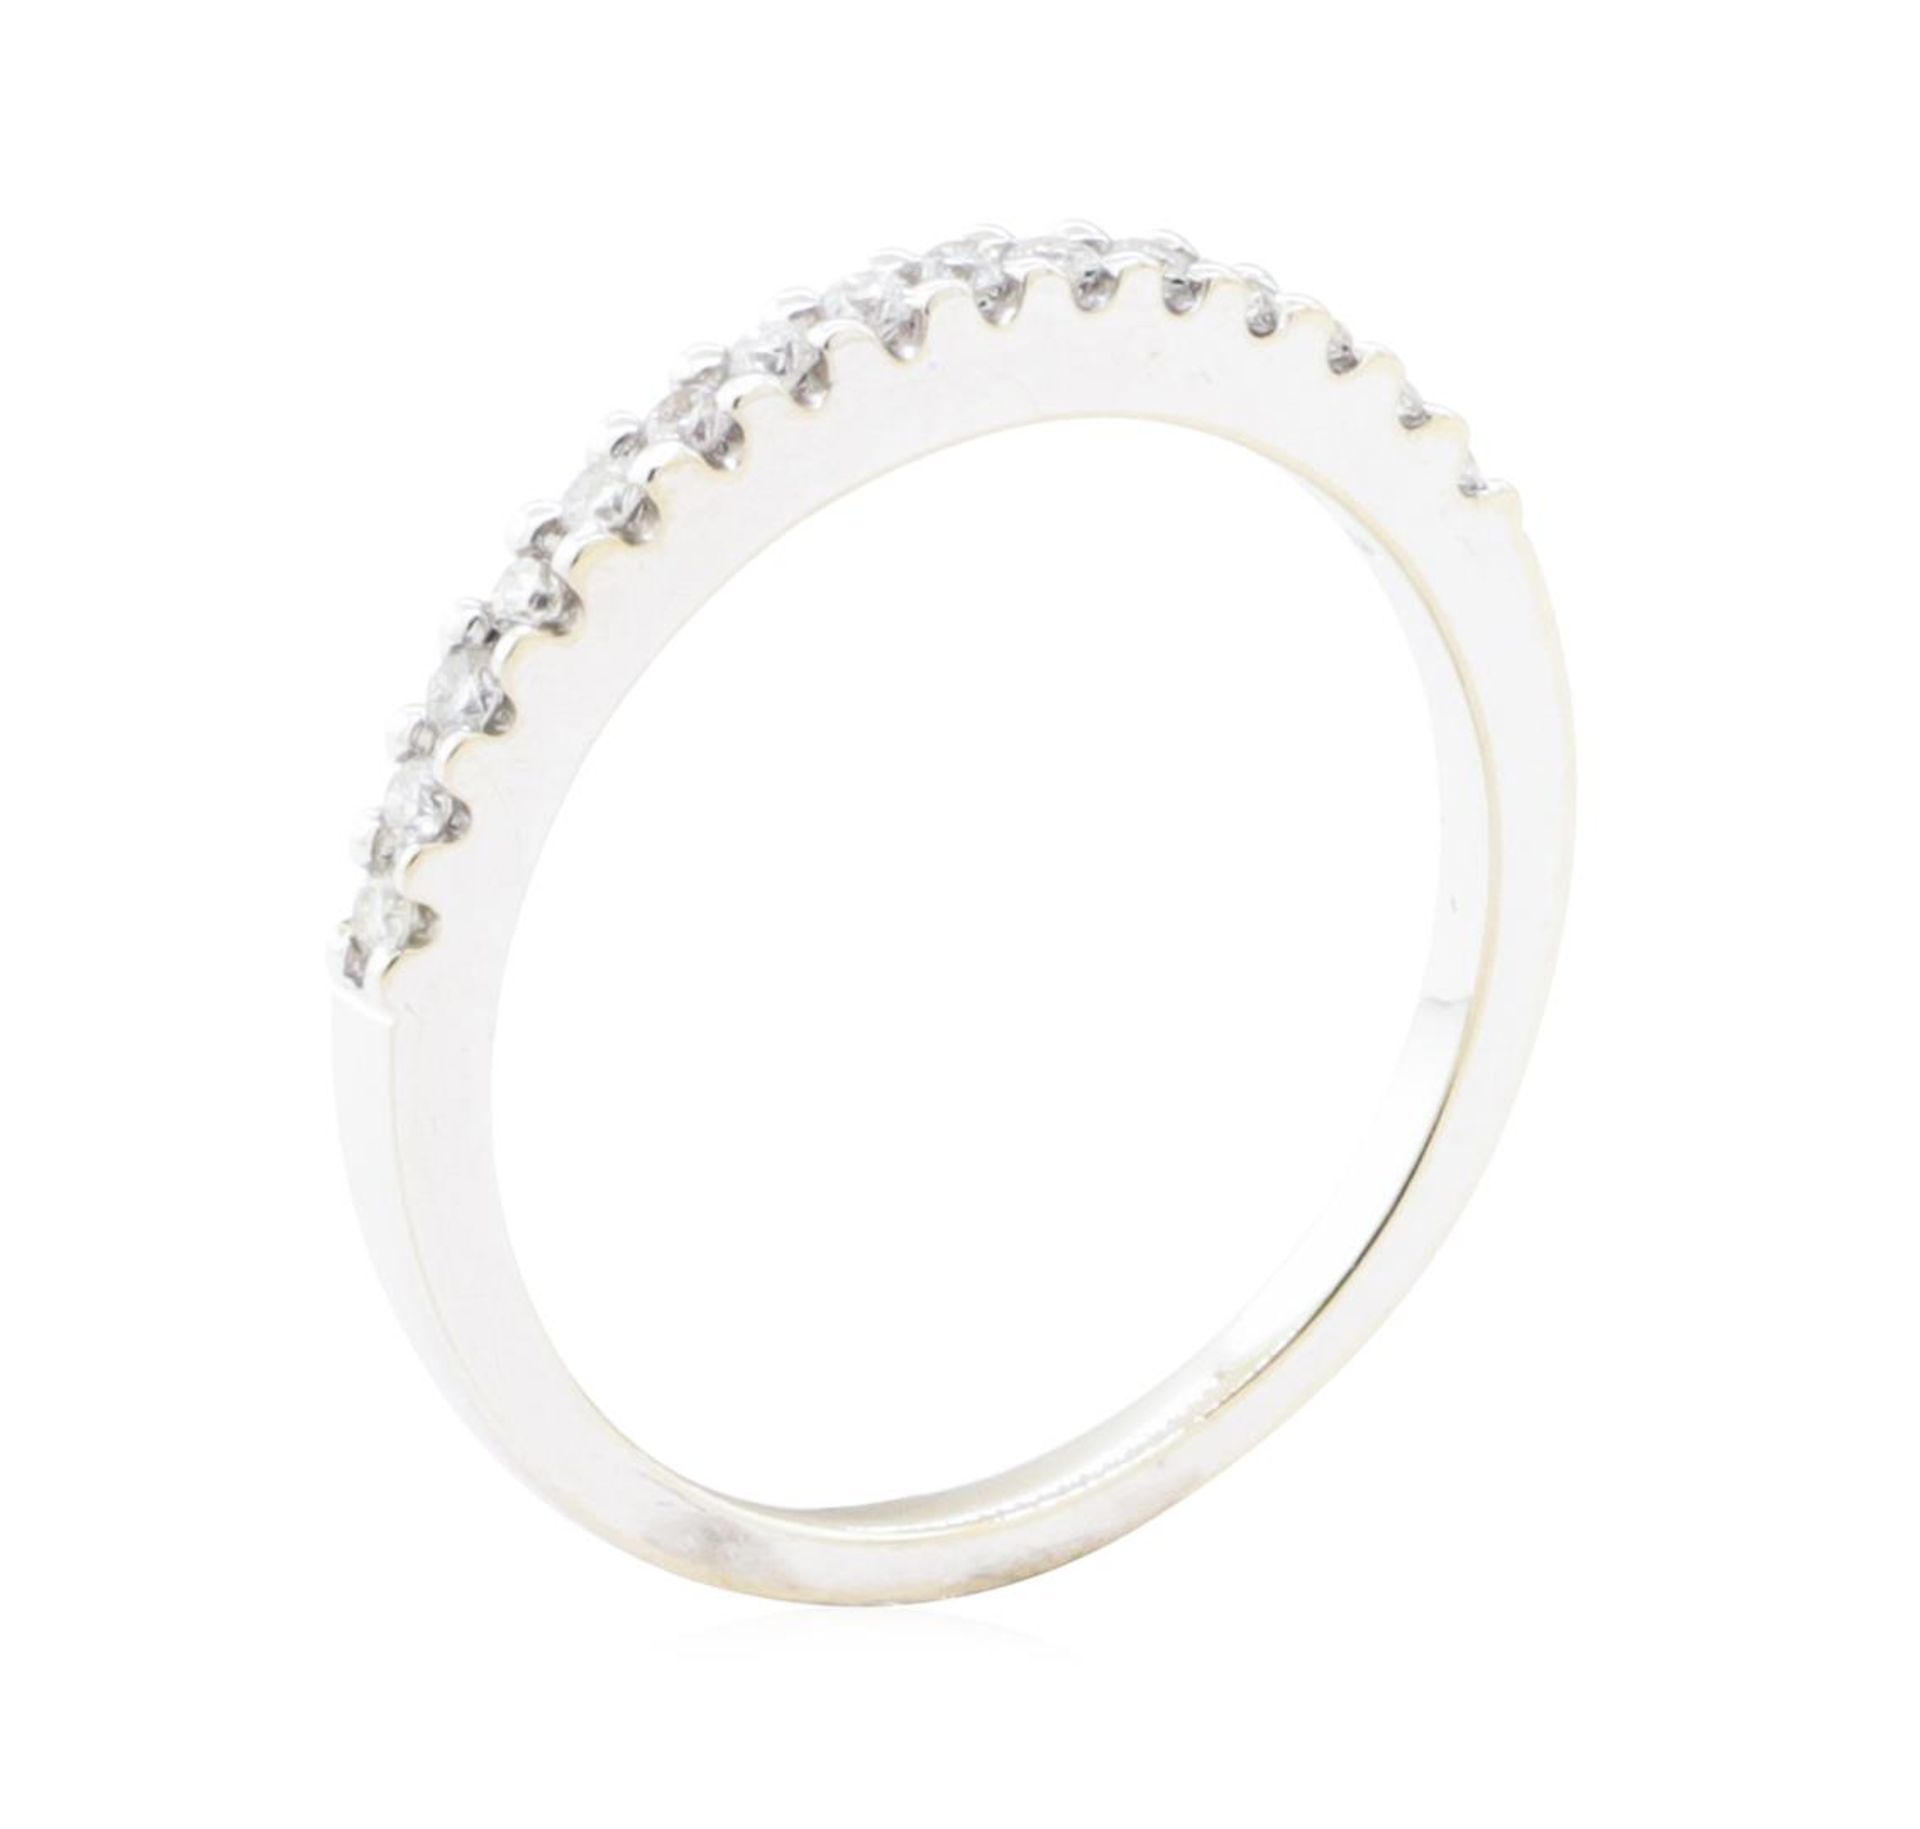 0.15 ctw Diamond Ring - 18KT White Gold - Image 4 of 4